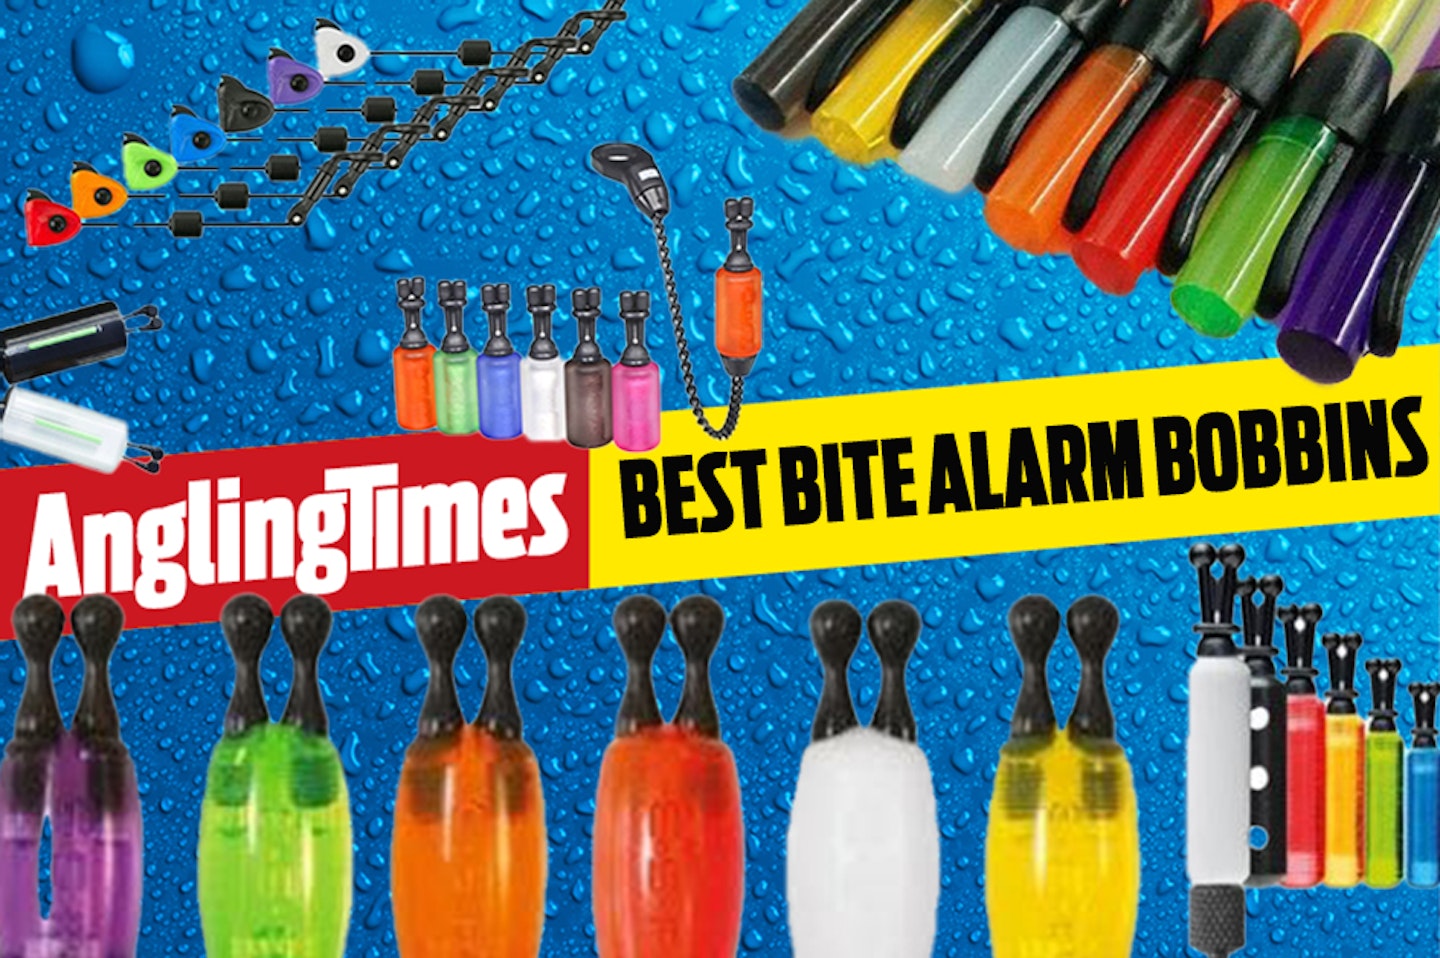 The best bite alarm bobbins